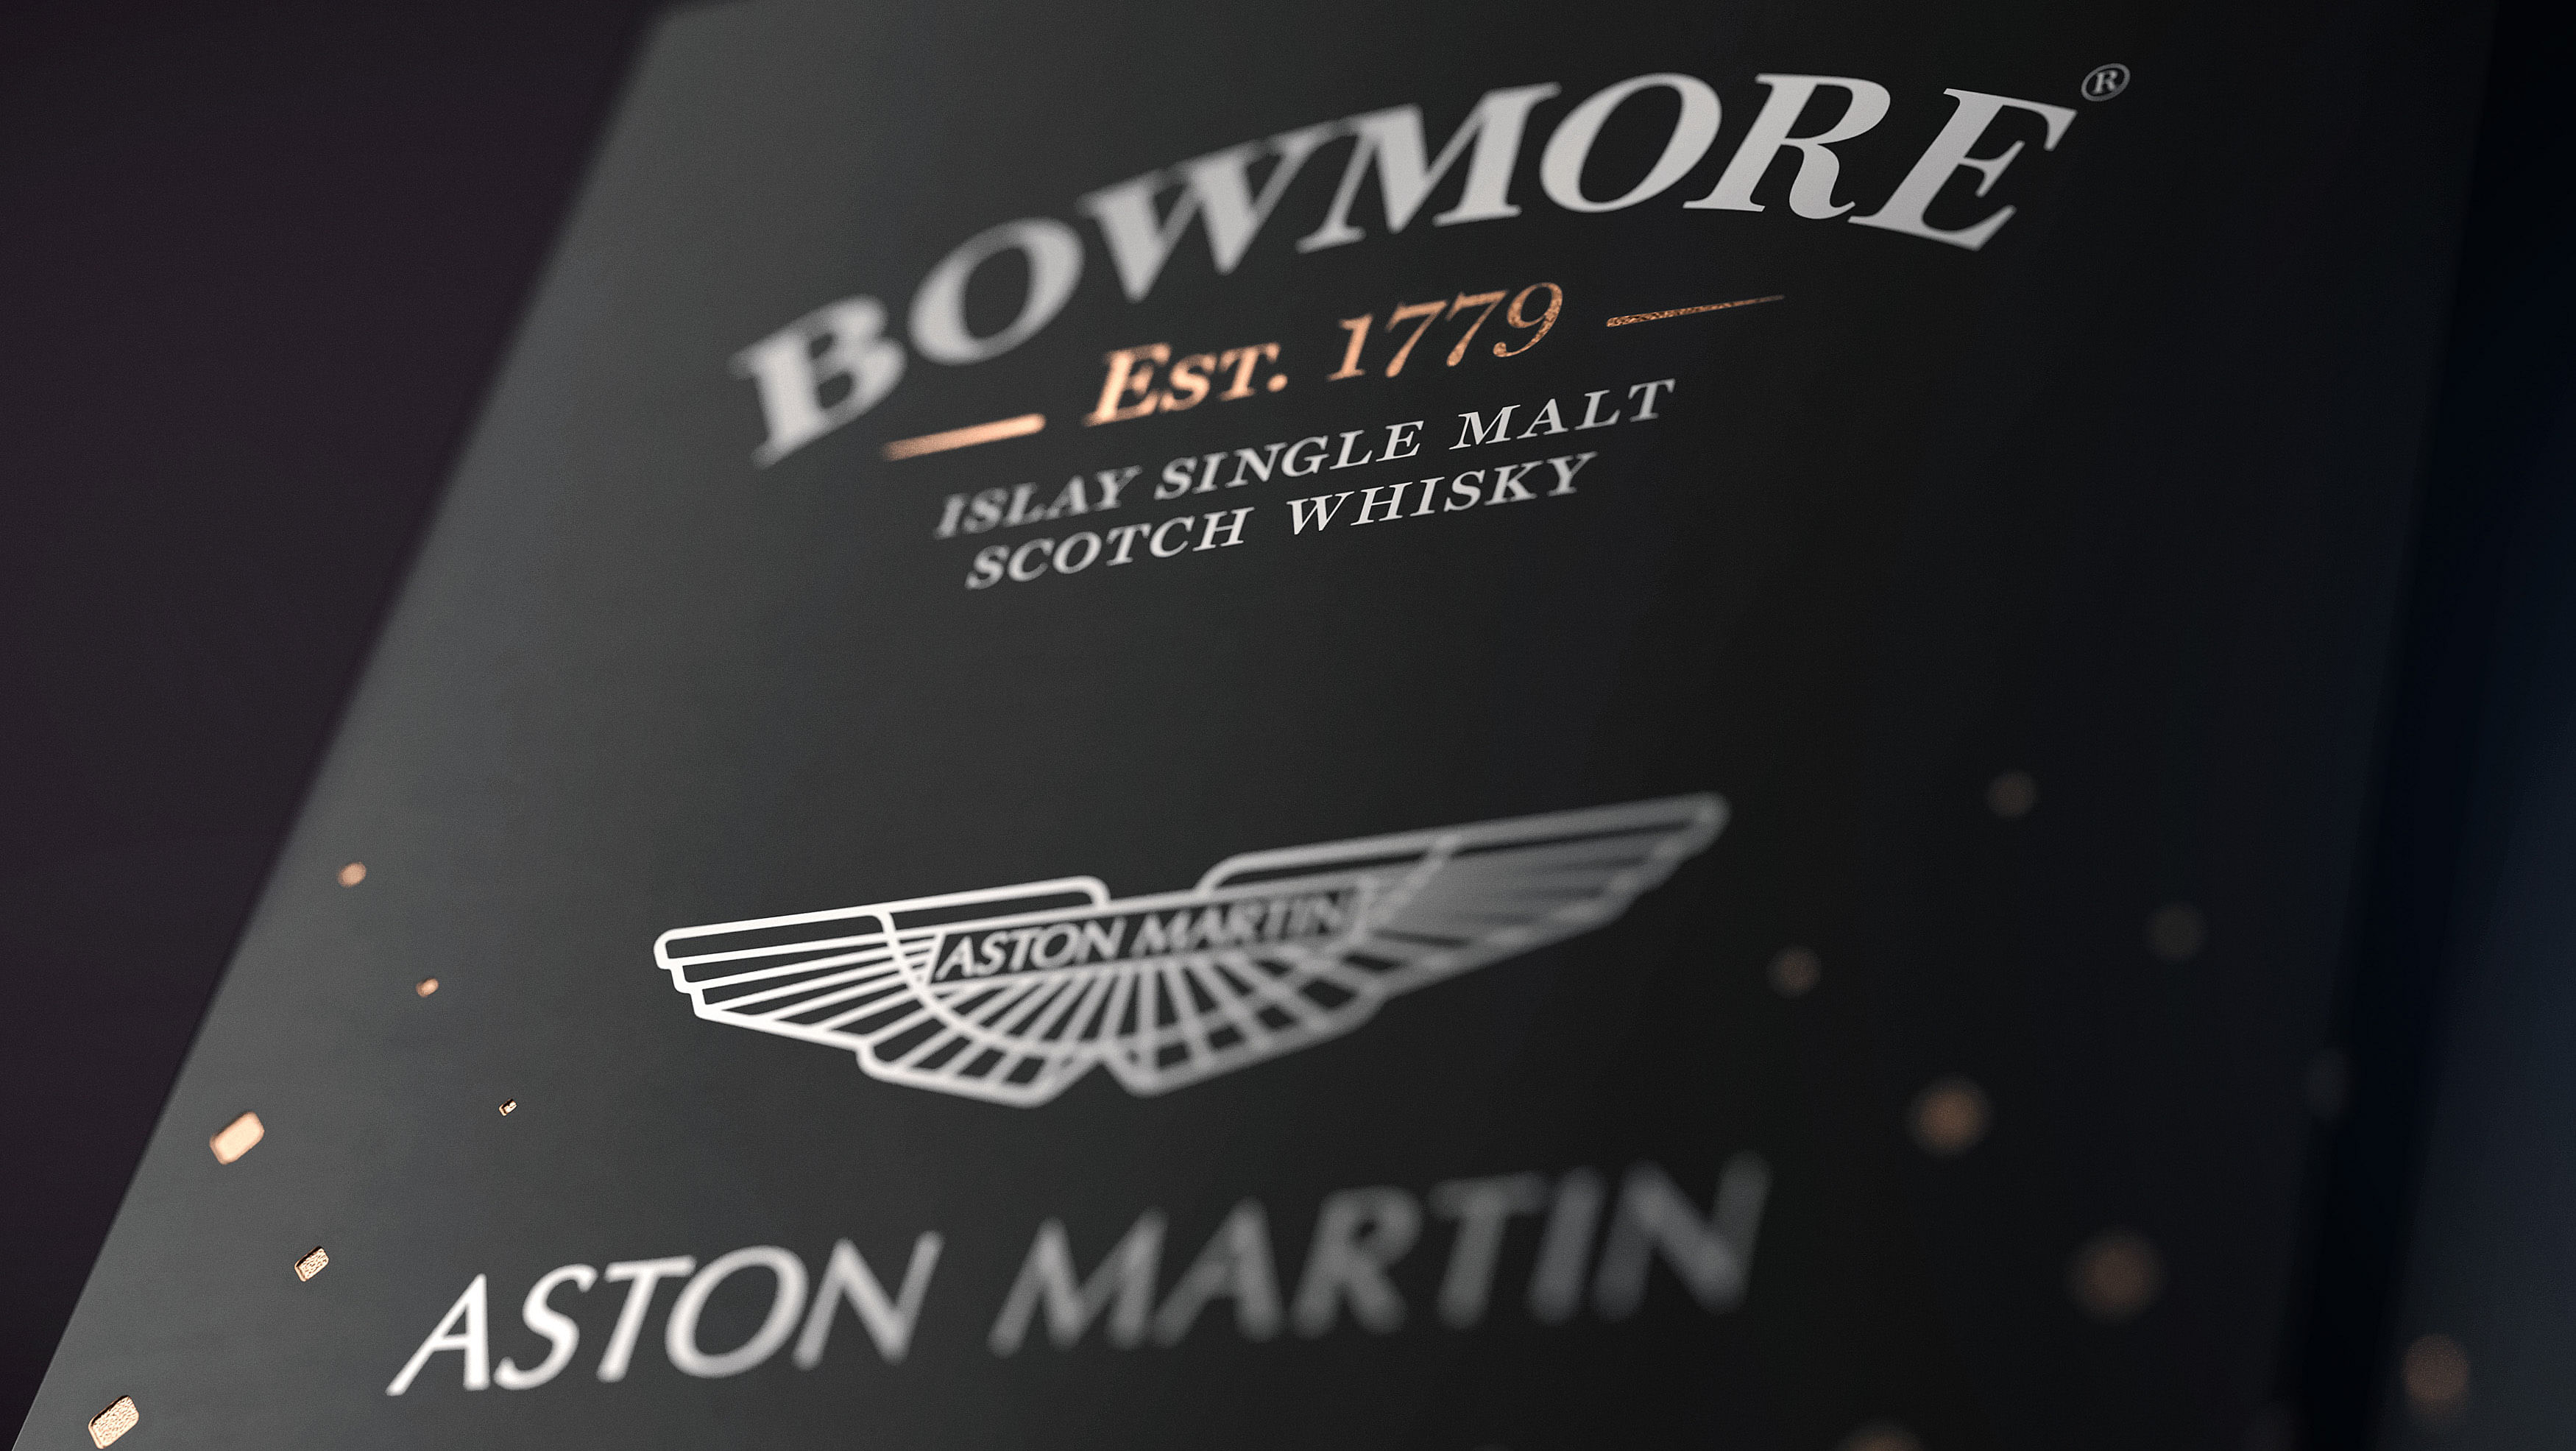 Bowmore Aston Martin single malt whisky.